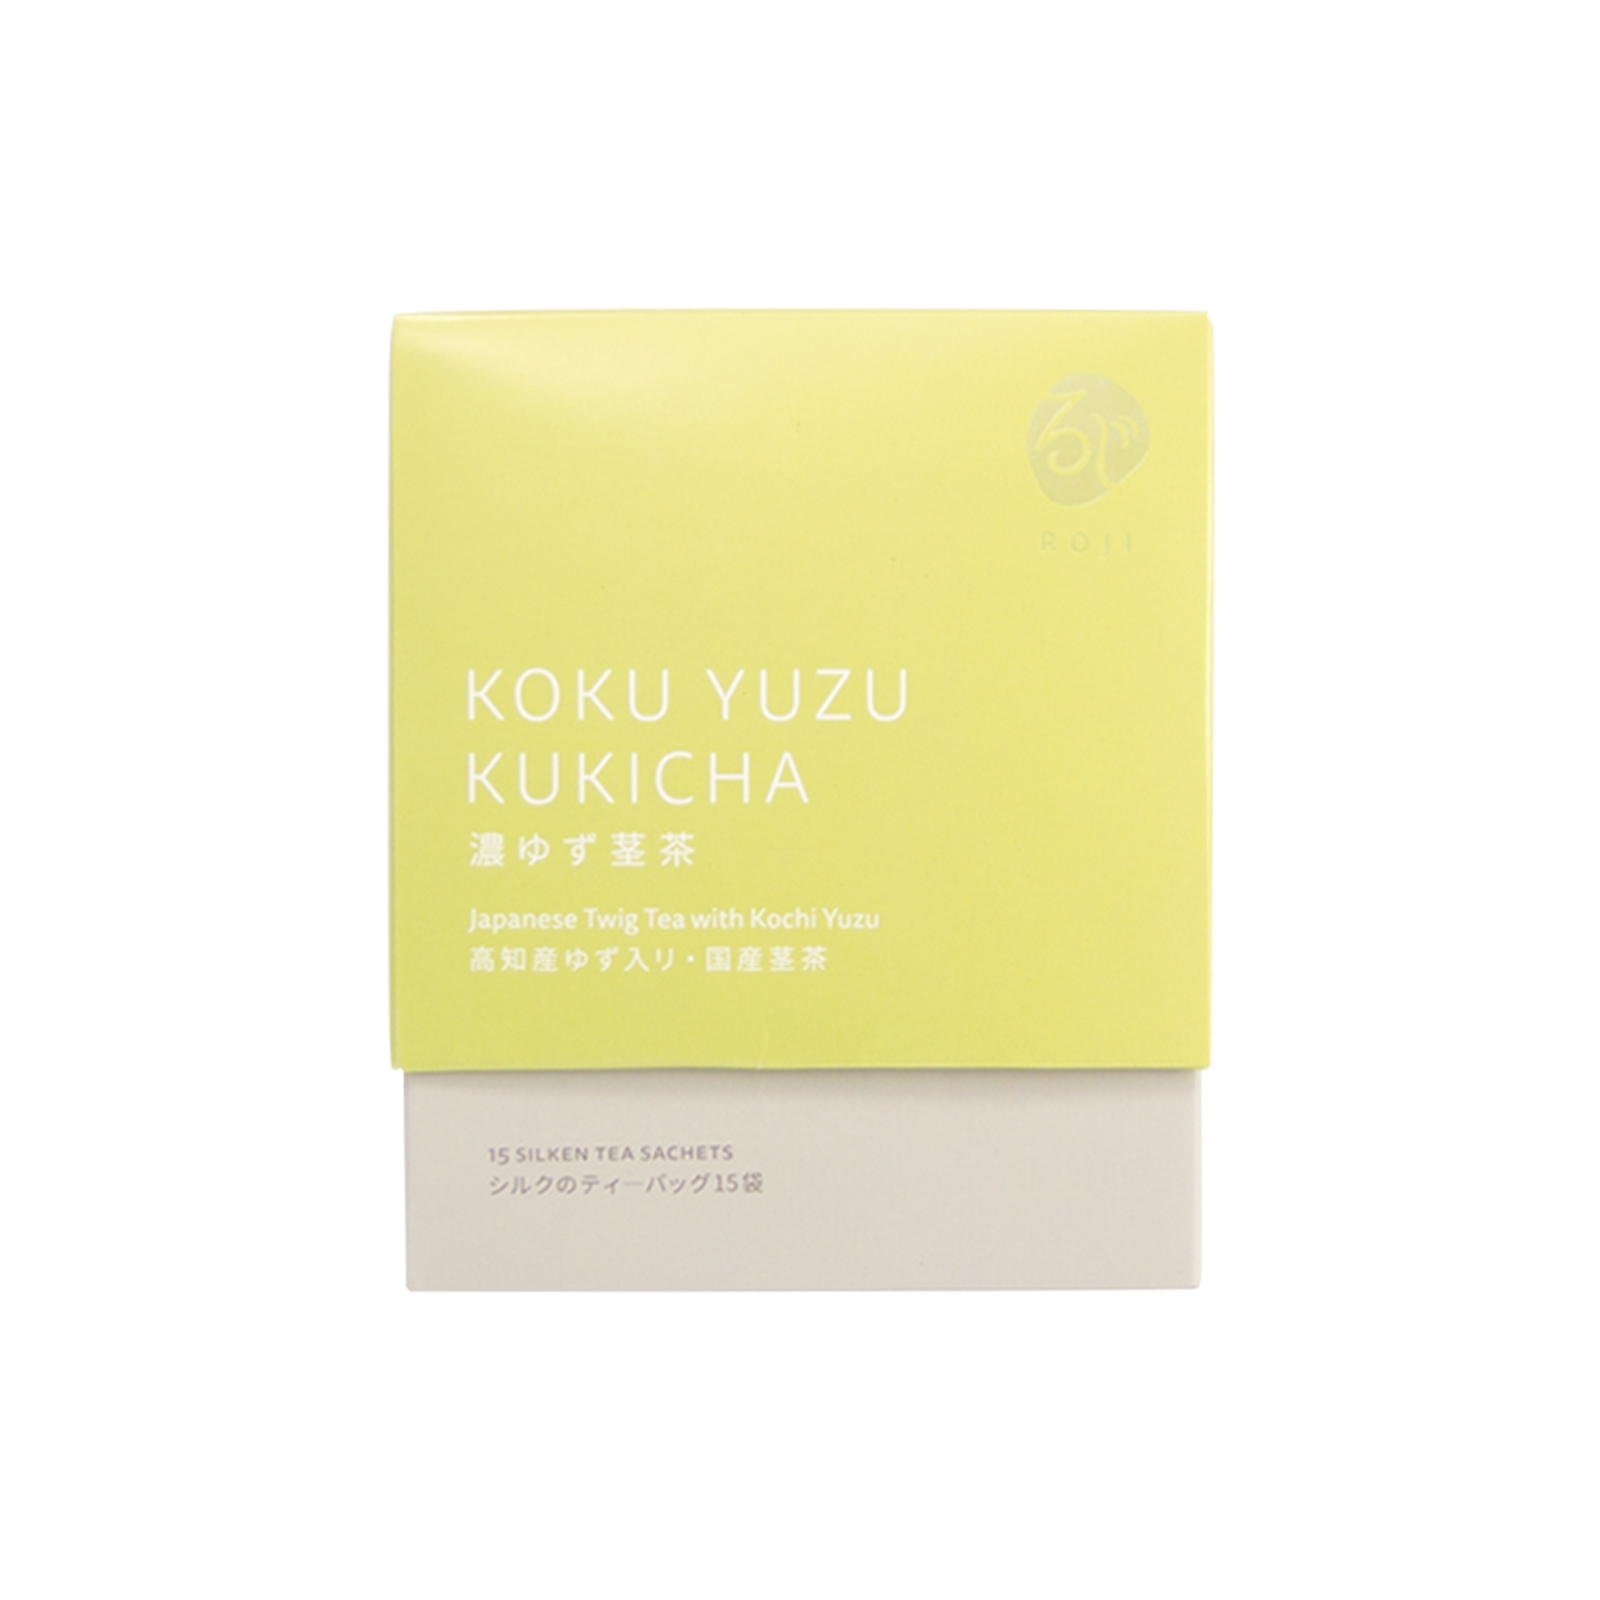 [ROJI CHA] Koku Yuzu Kukicha Green Tea Japanese Twig Tea with Koki Yuzu - 15 Sachets